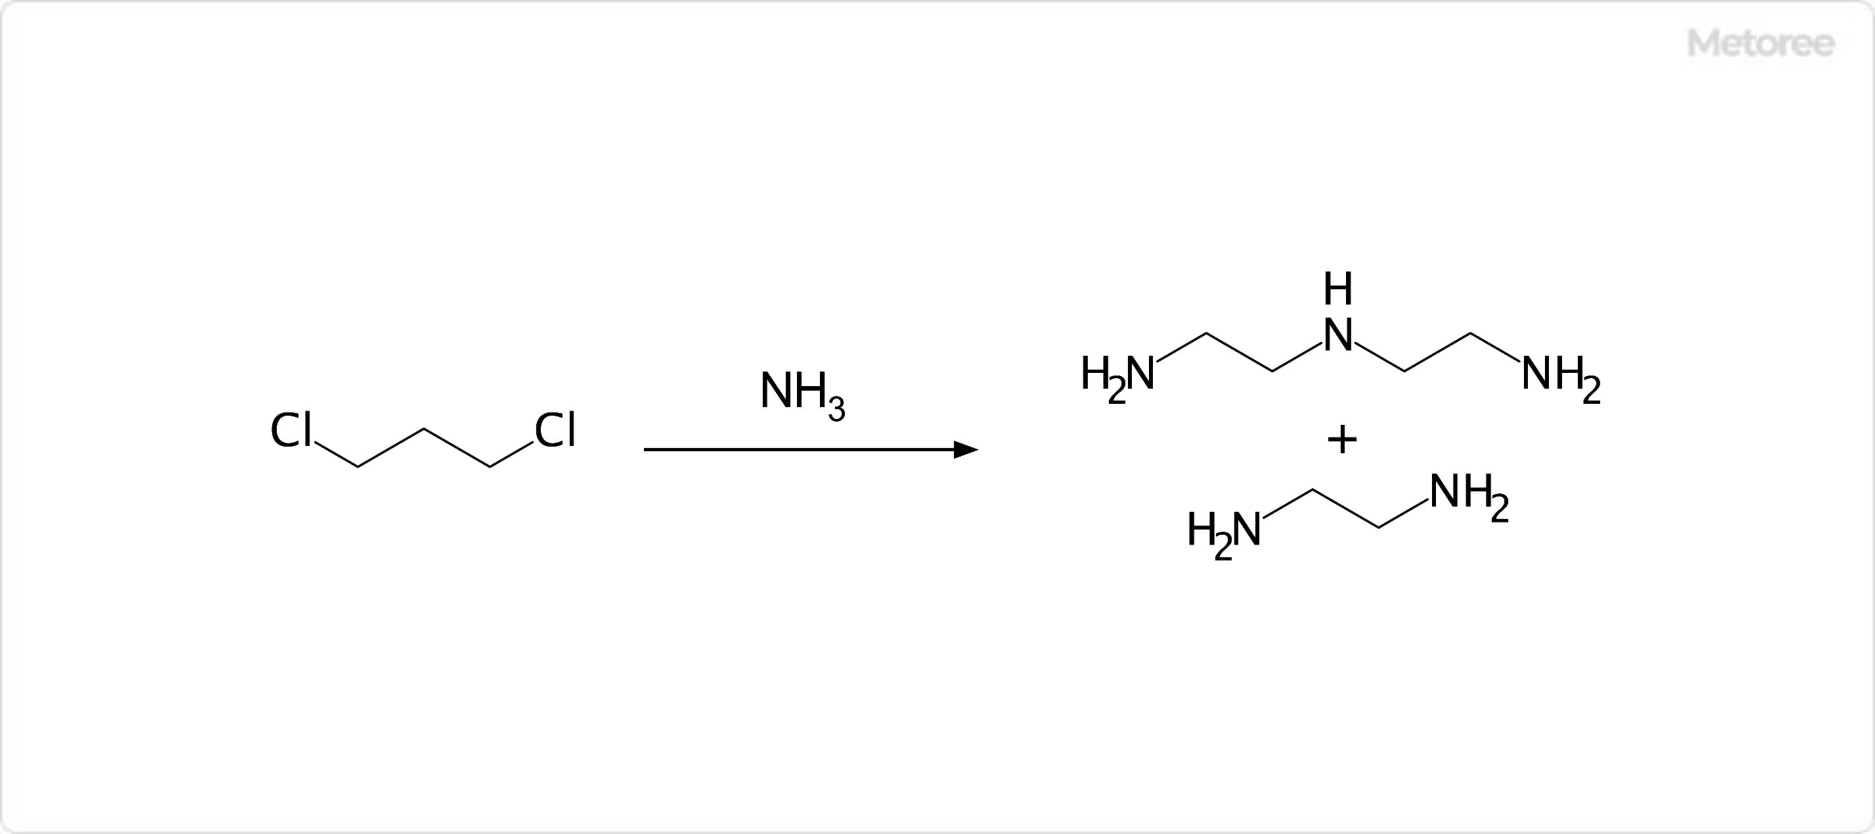 Synthesis of Diethylenetriamine